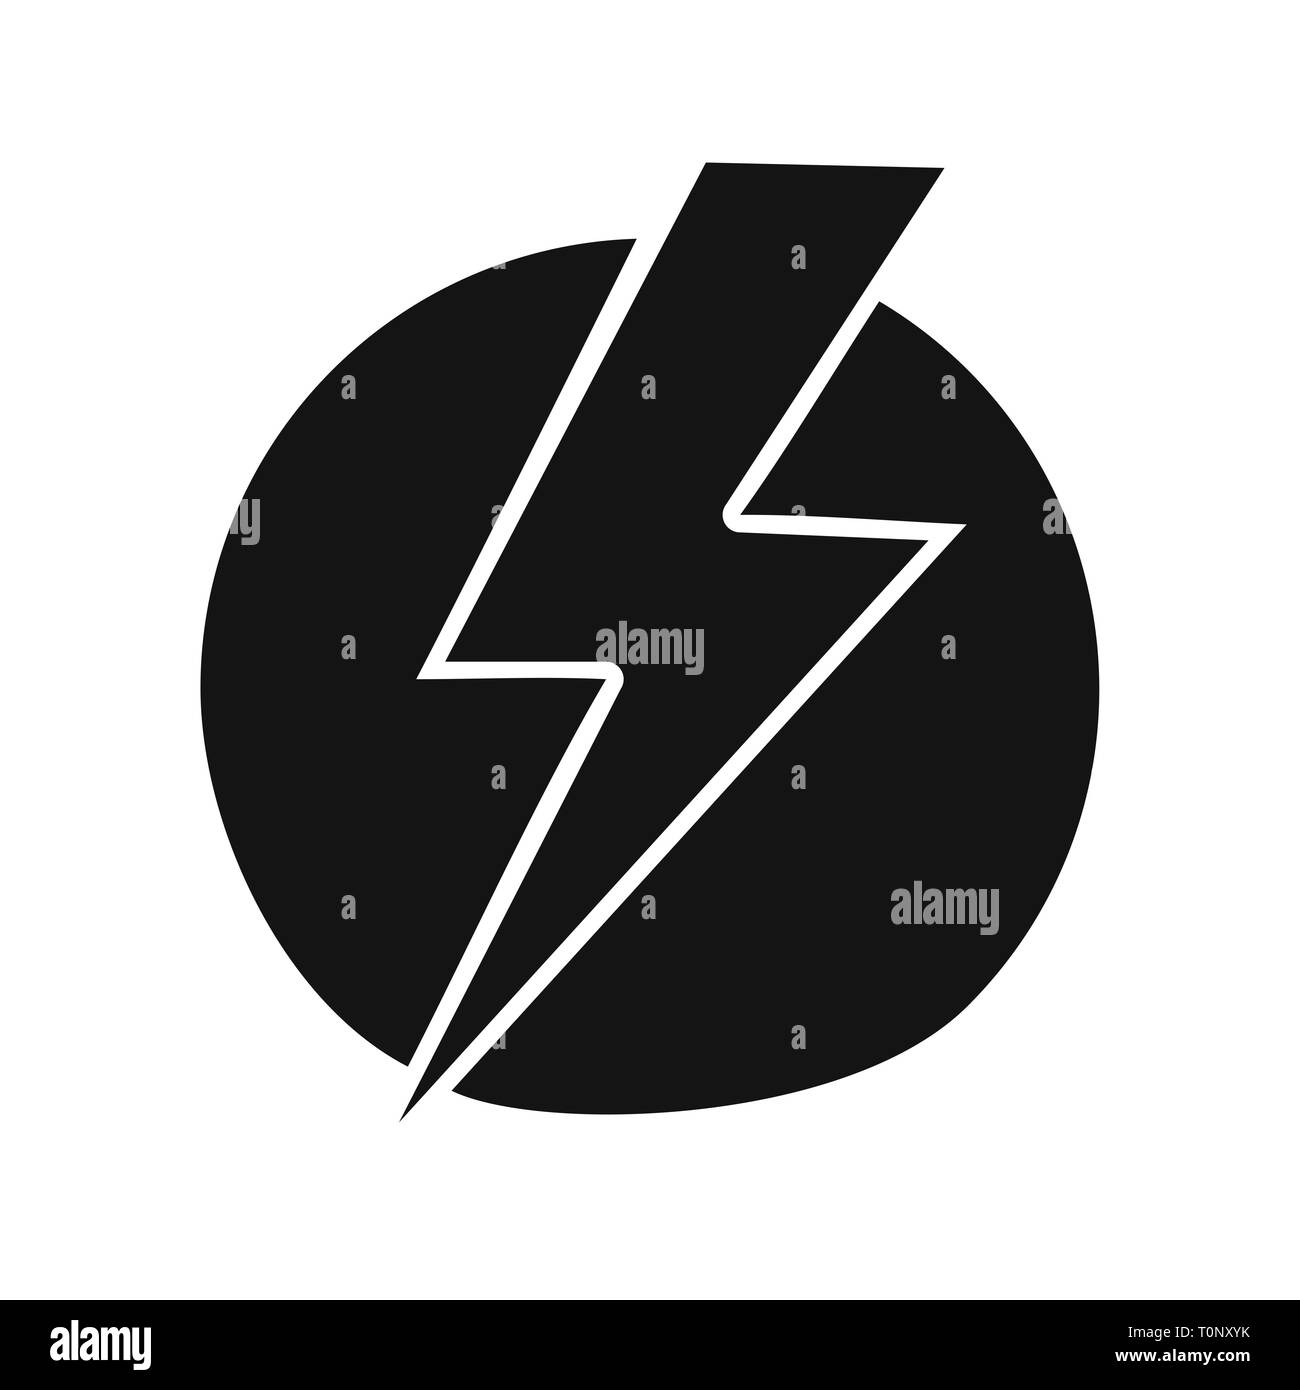 Illustration Electric Shock Icon Stock Photo